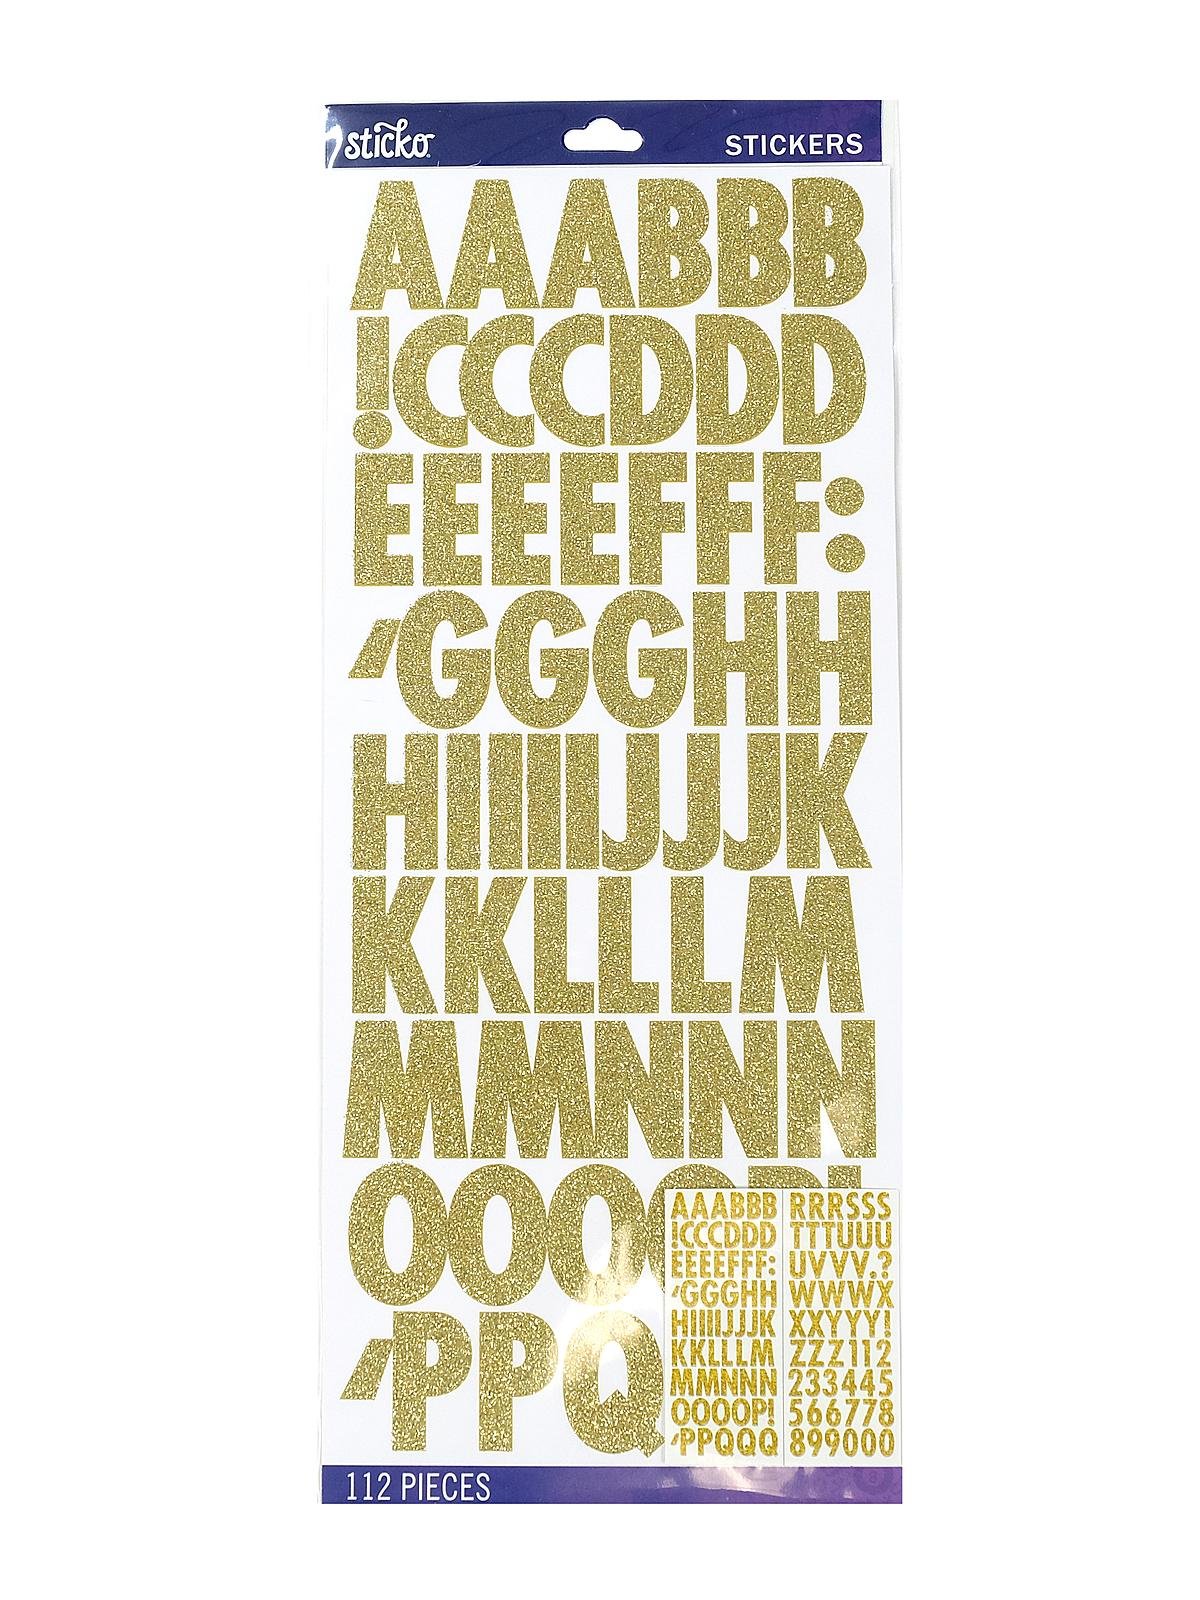 Sticko Alphabet Sticker, Extra Large, Assorted Colors